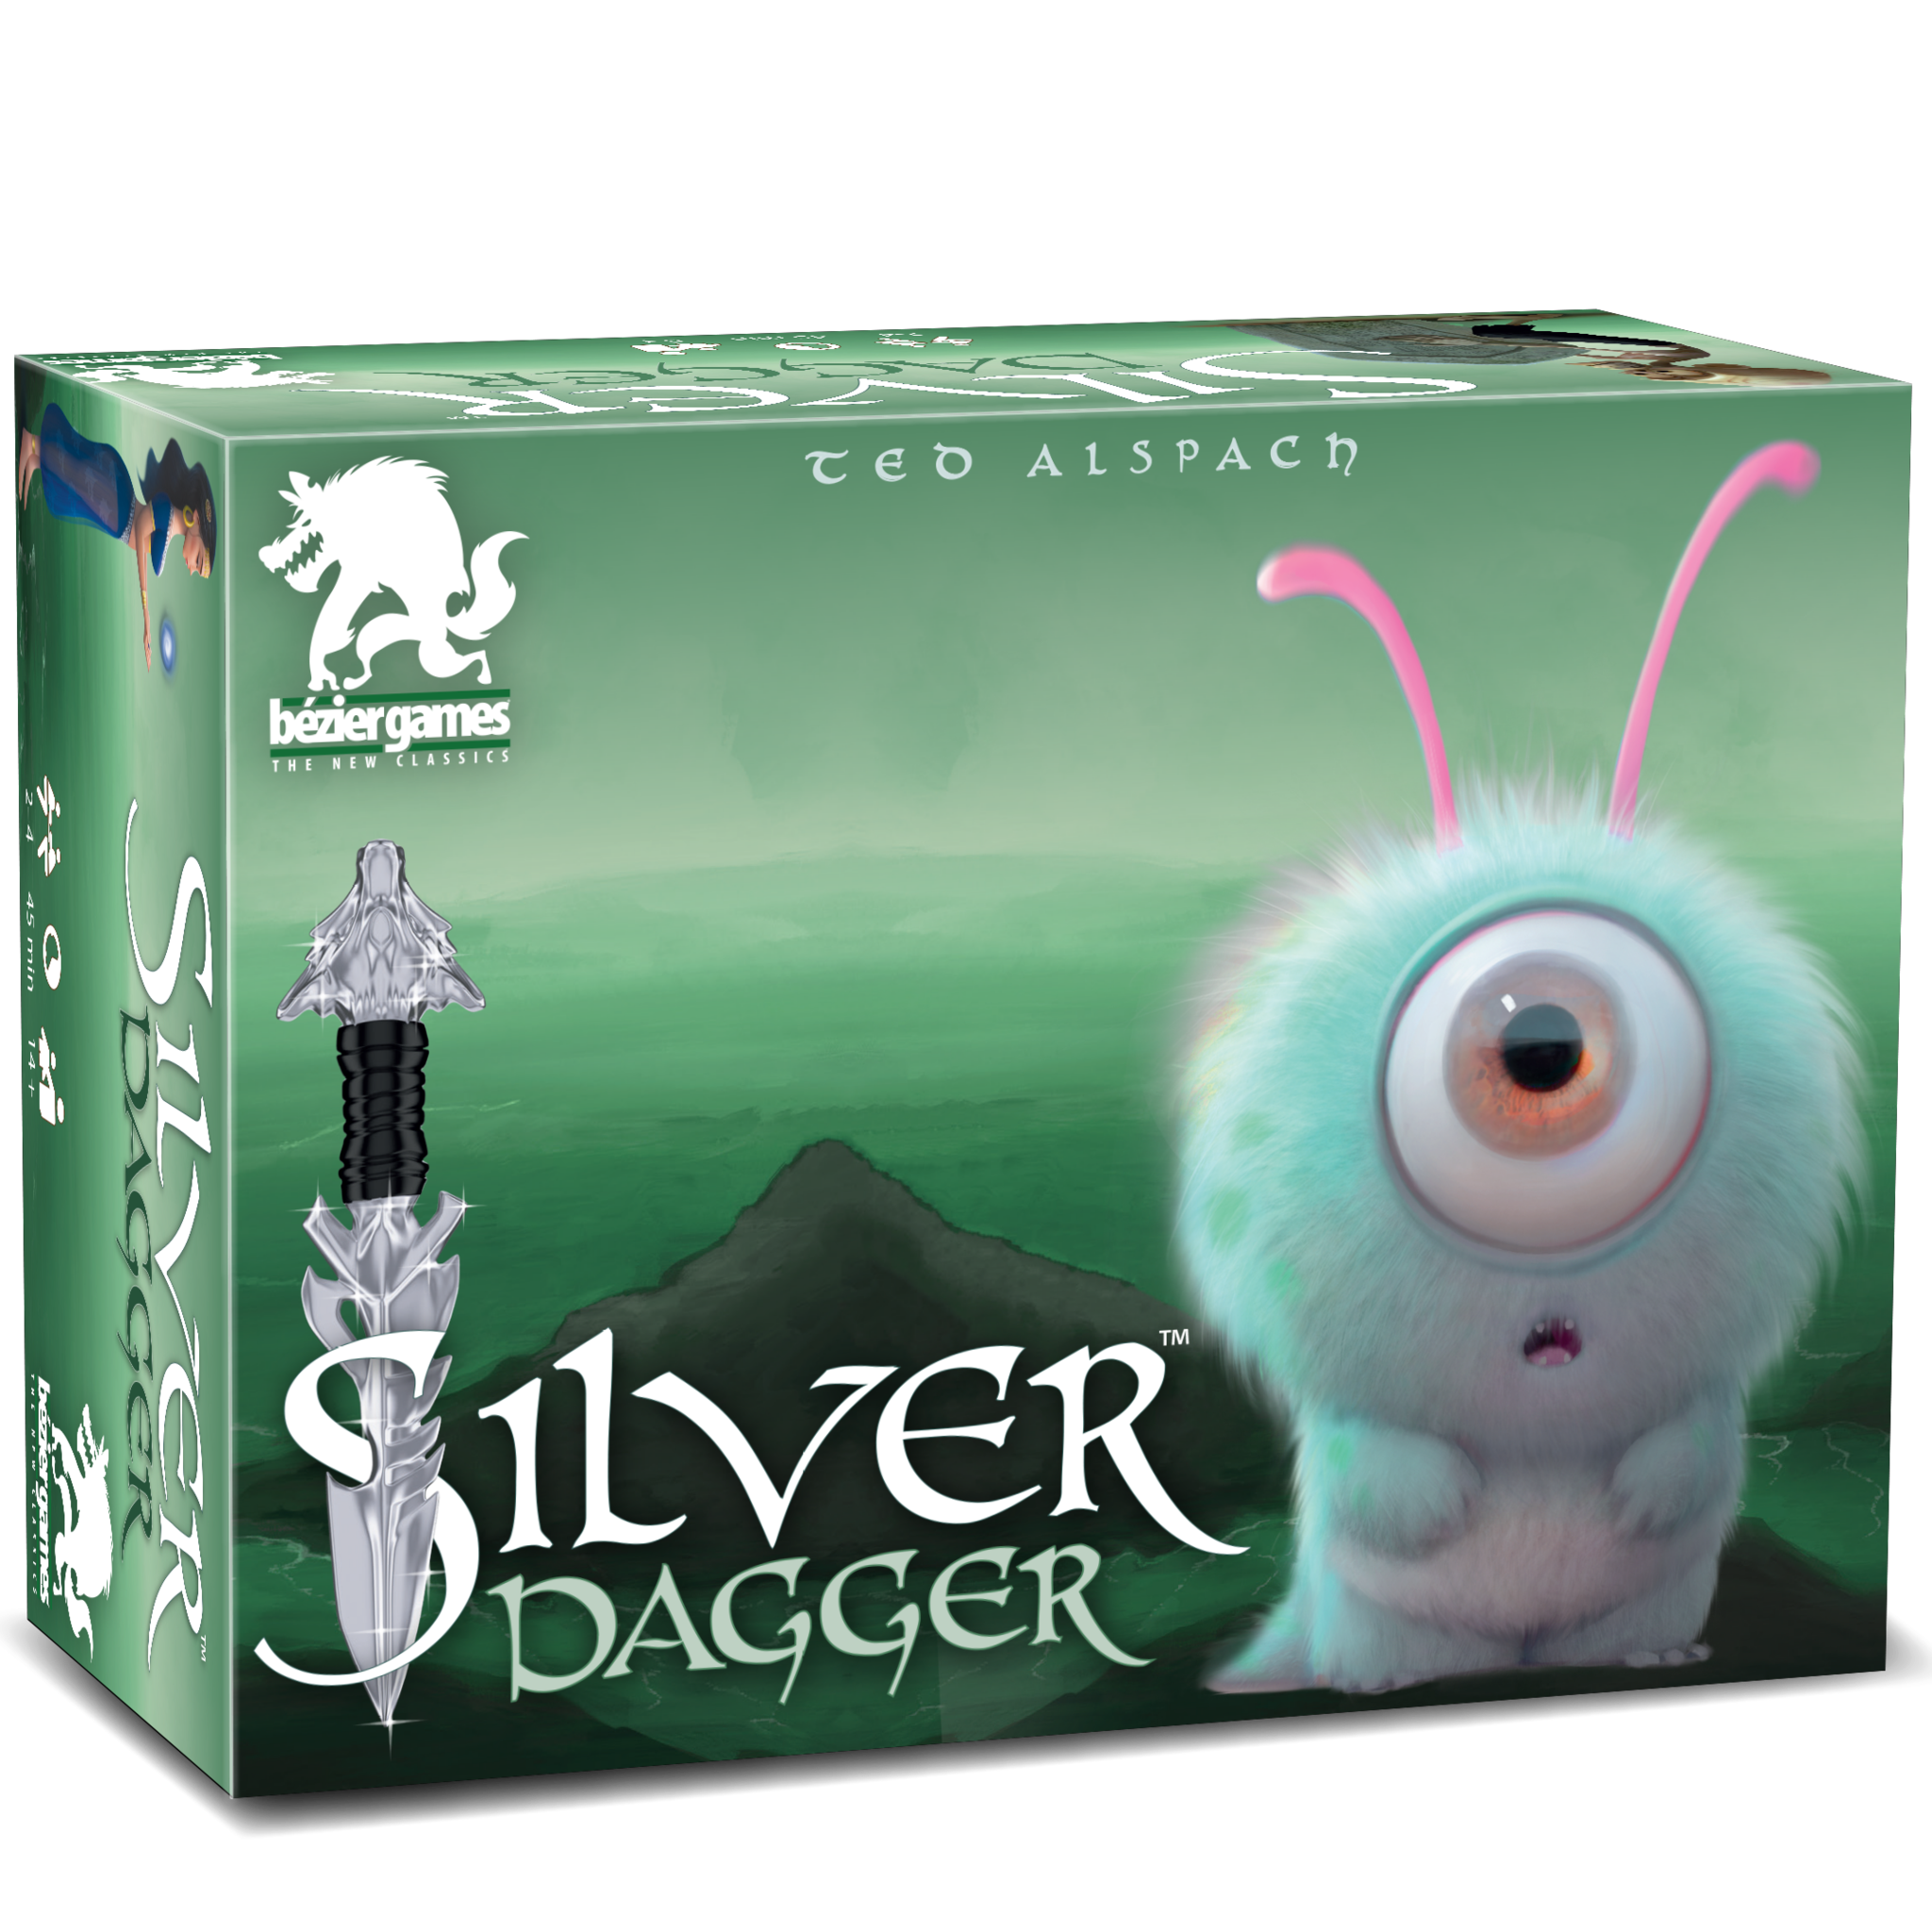 Silver Bullet - Bezier Games